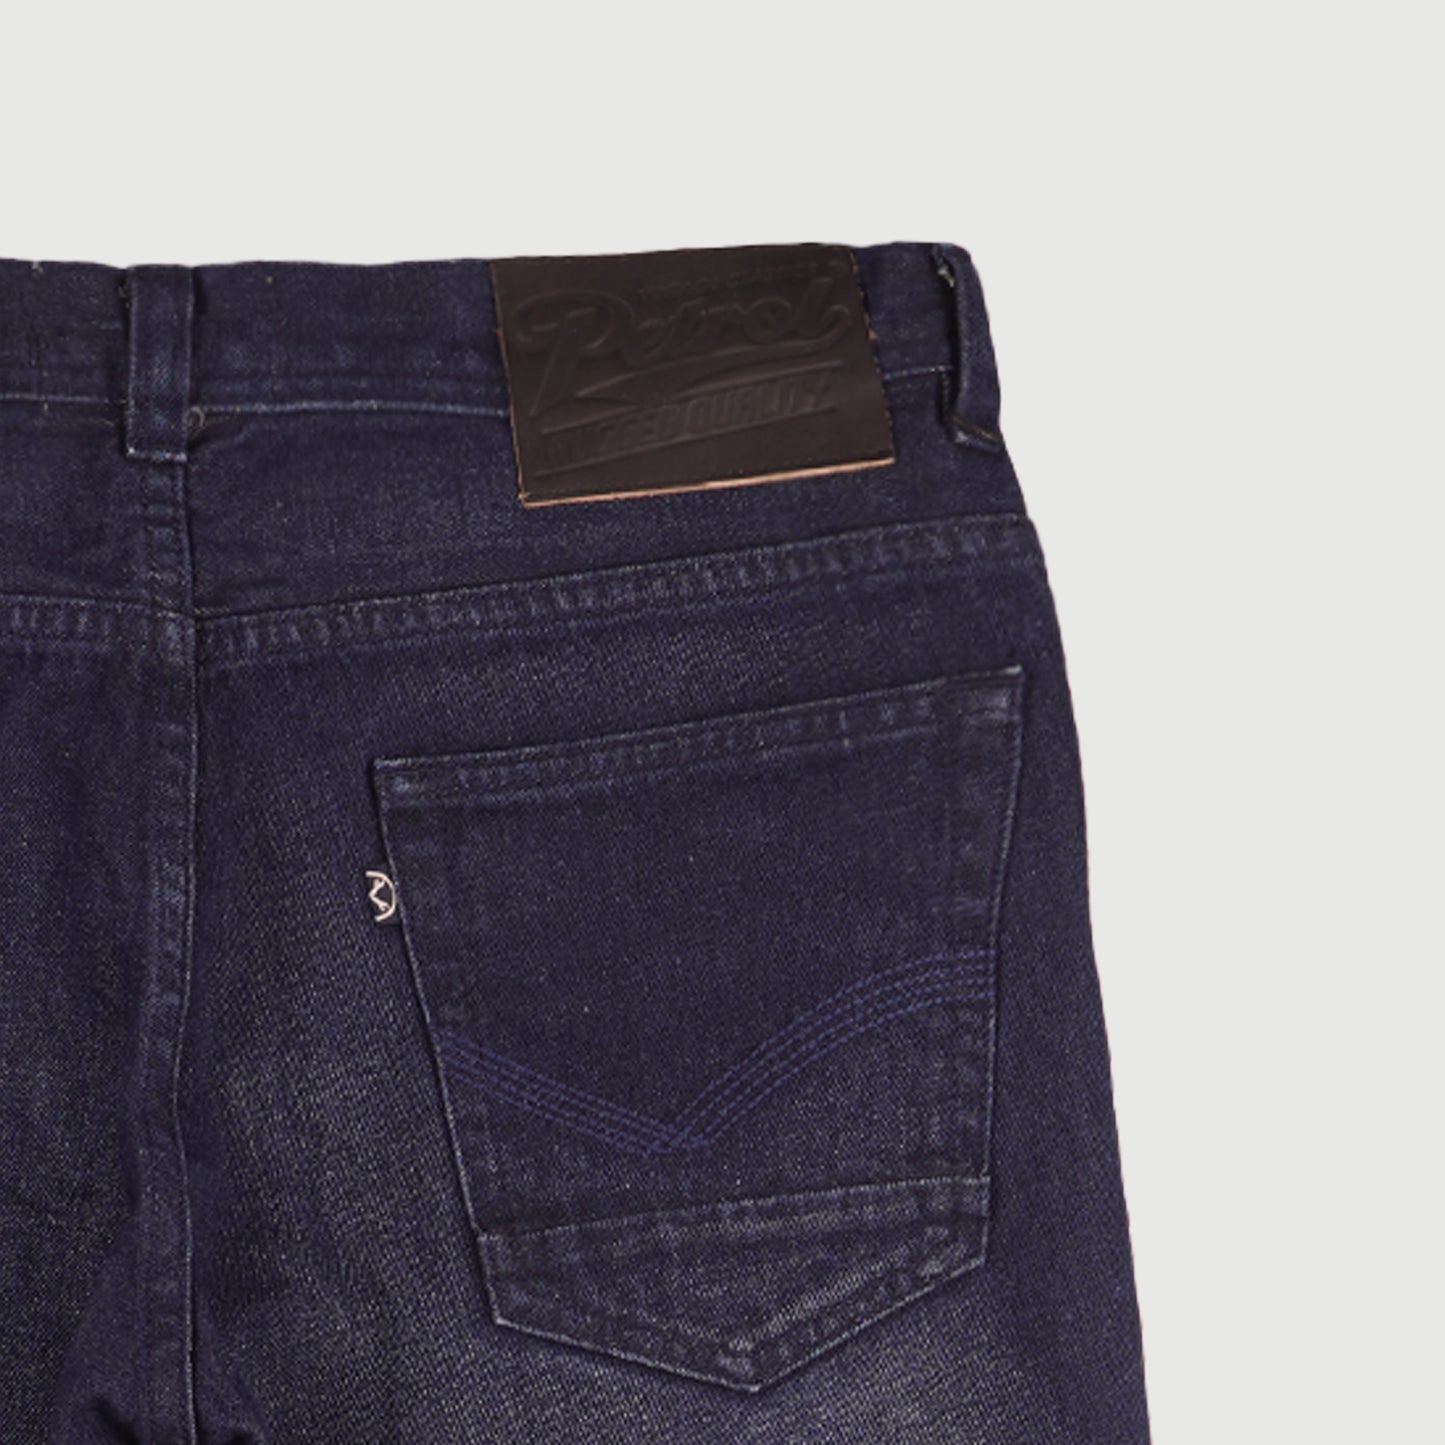 Petrol Basic Denim Pants for Men Super Skinny Fitting Mid Rise Trendy fashion Casual Bottoms Dark Shade Jeans for Men 149644-U (Dark Shade)